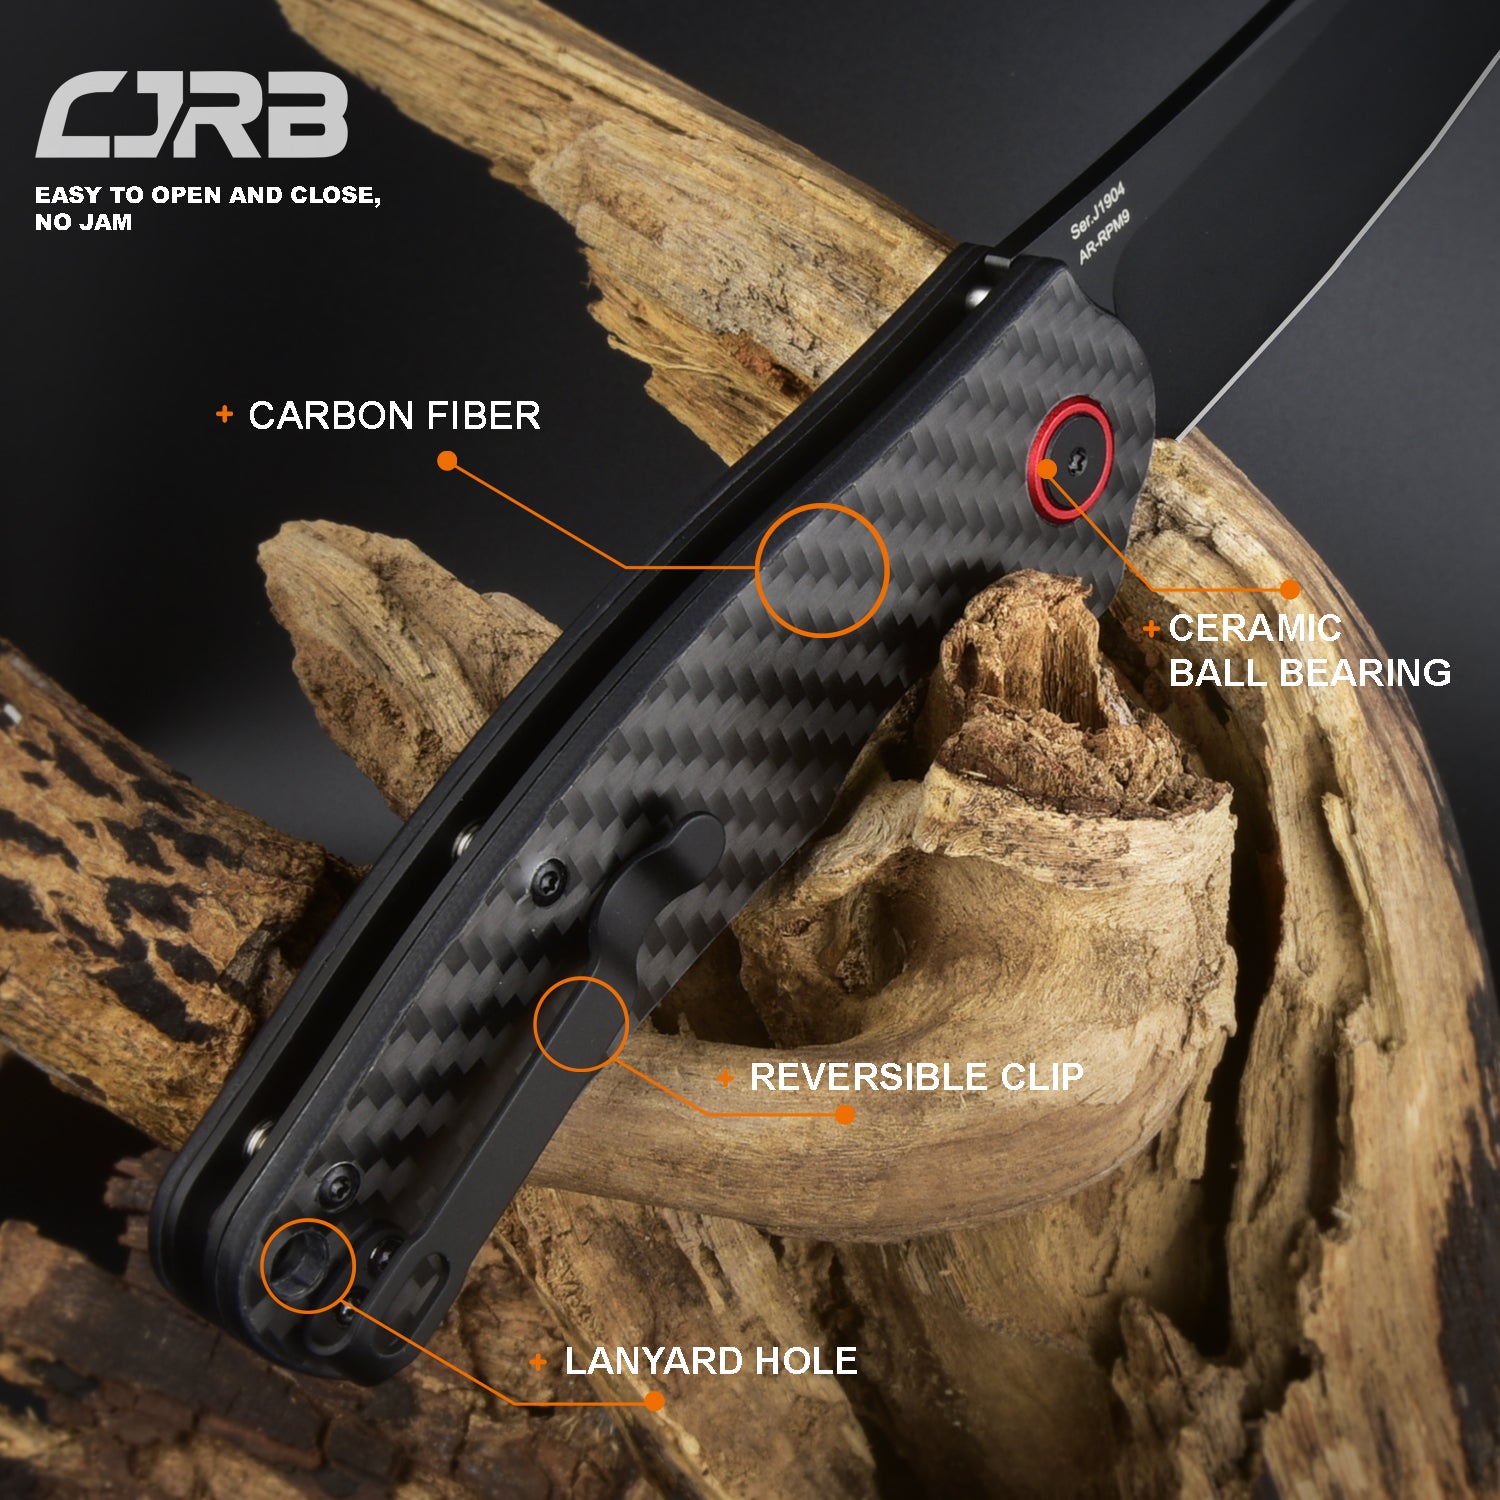 CJRB CRAG J1904 Folding Knife - AR-RPM9 Steel, Black PVD Blade